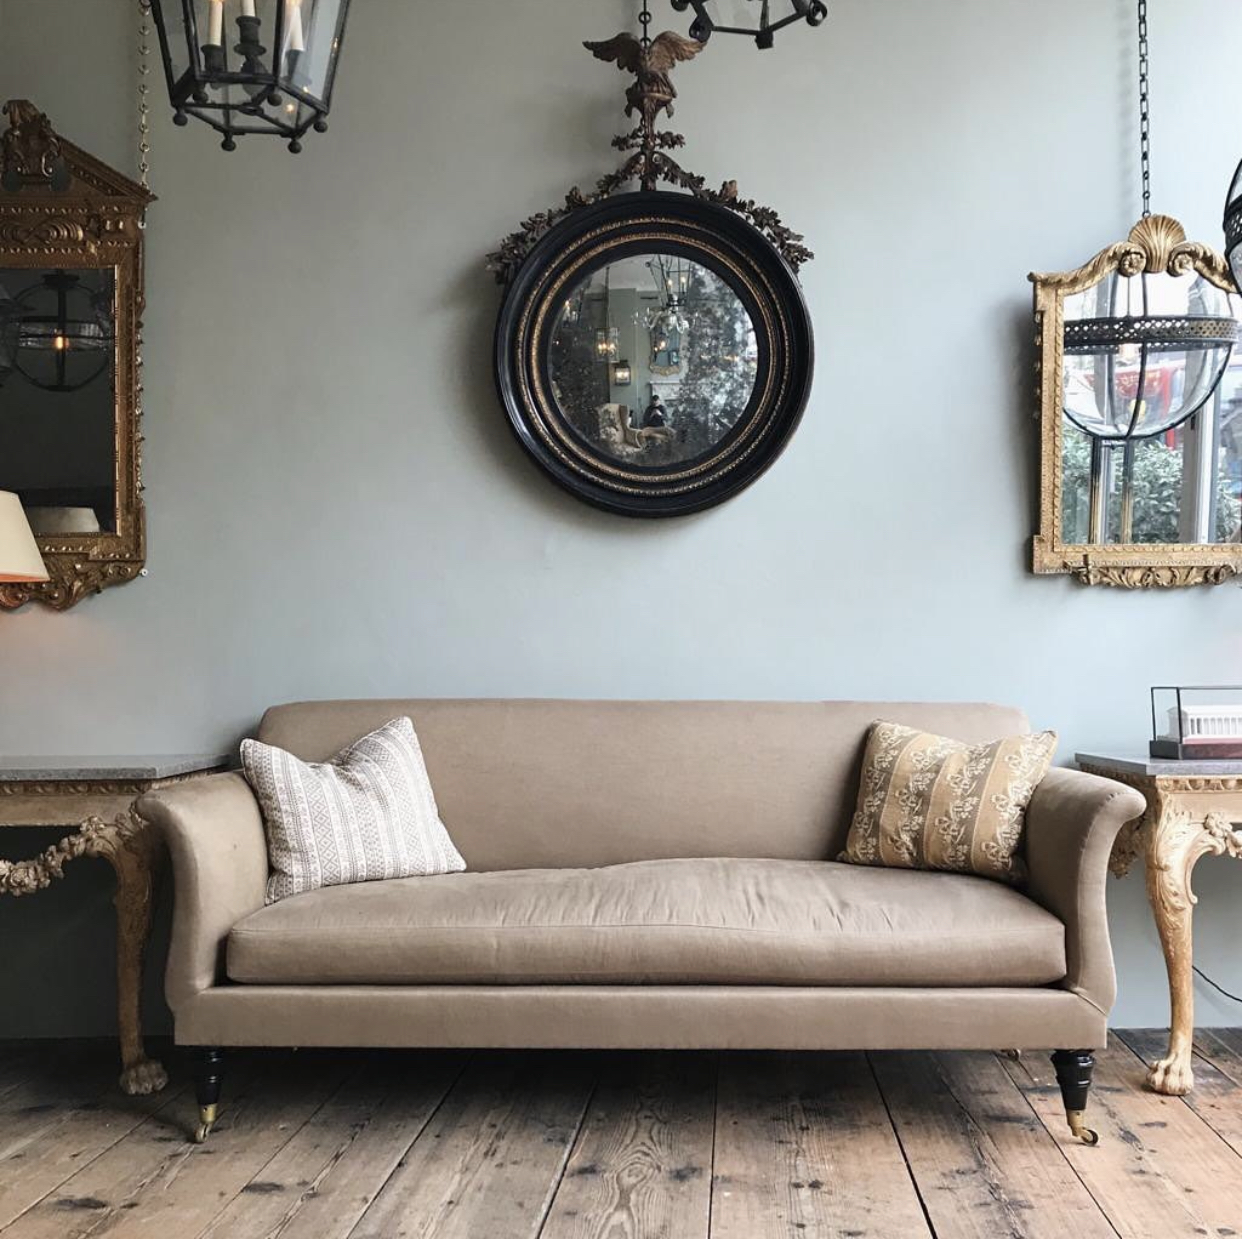 image via jamb london of a holland sofa in chatham mink by jasper fabrics